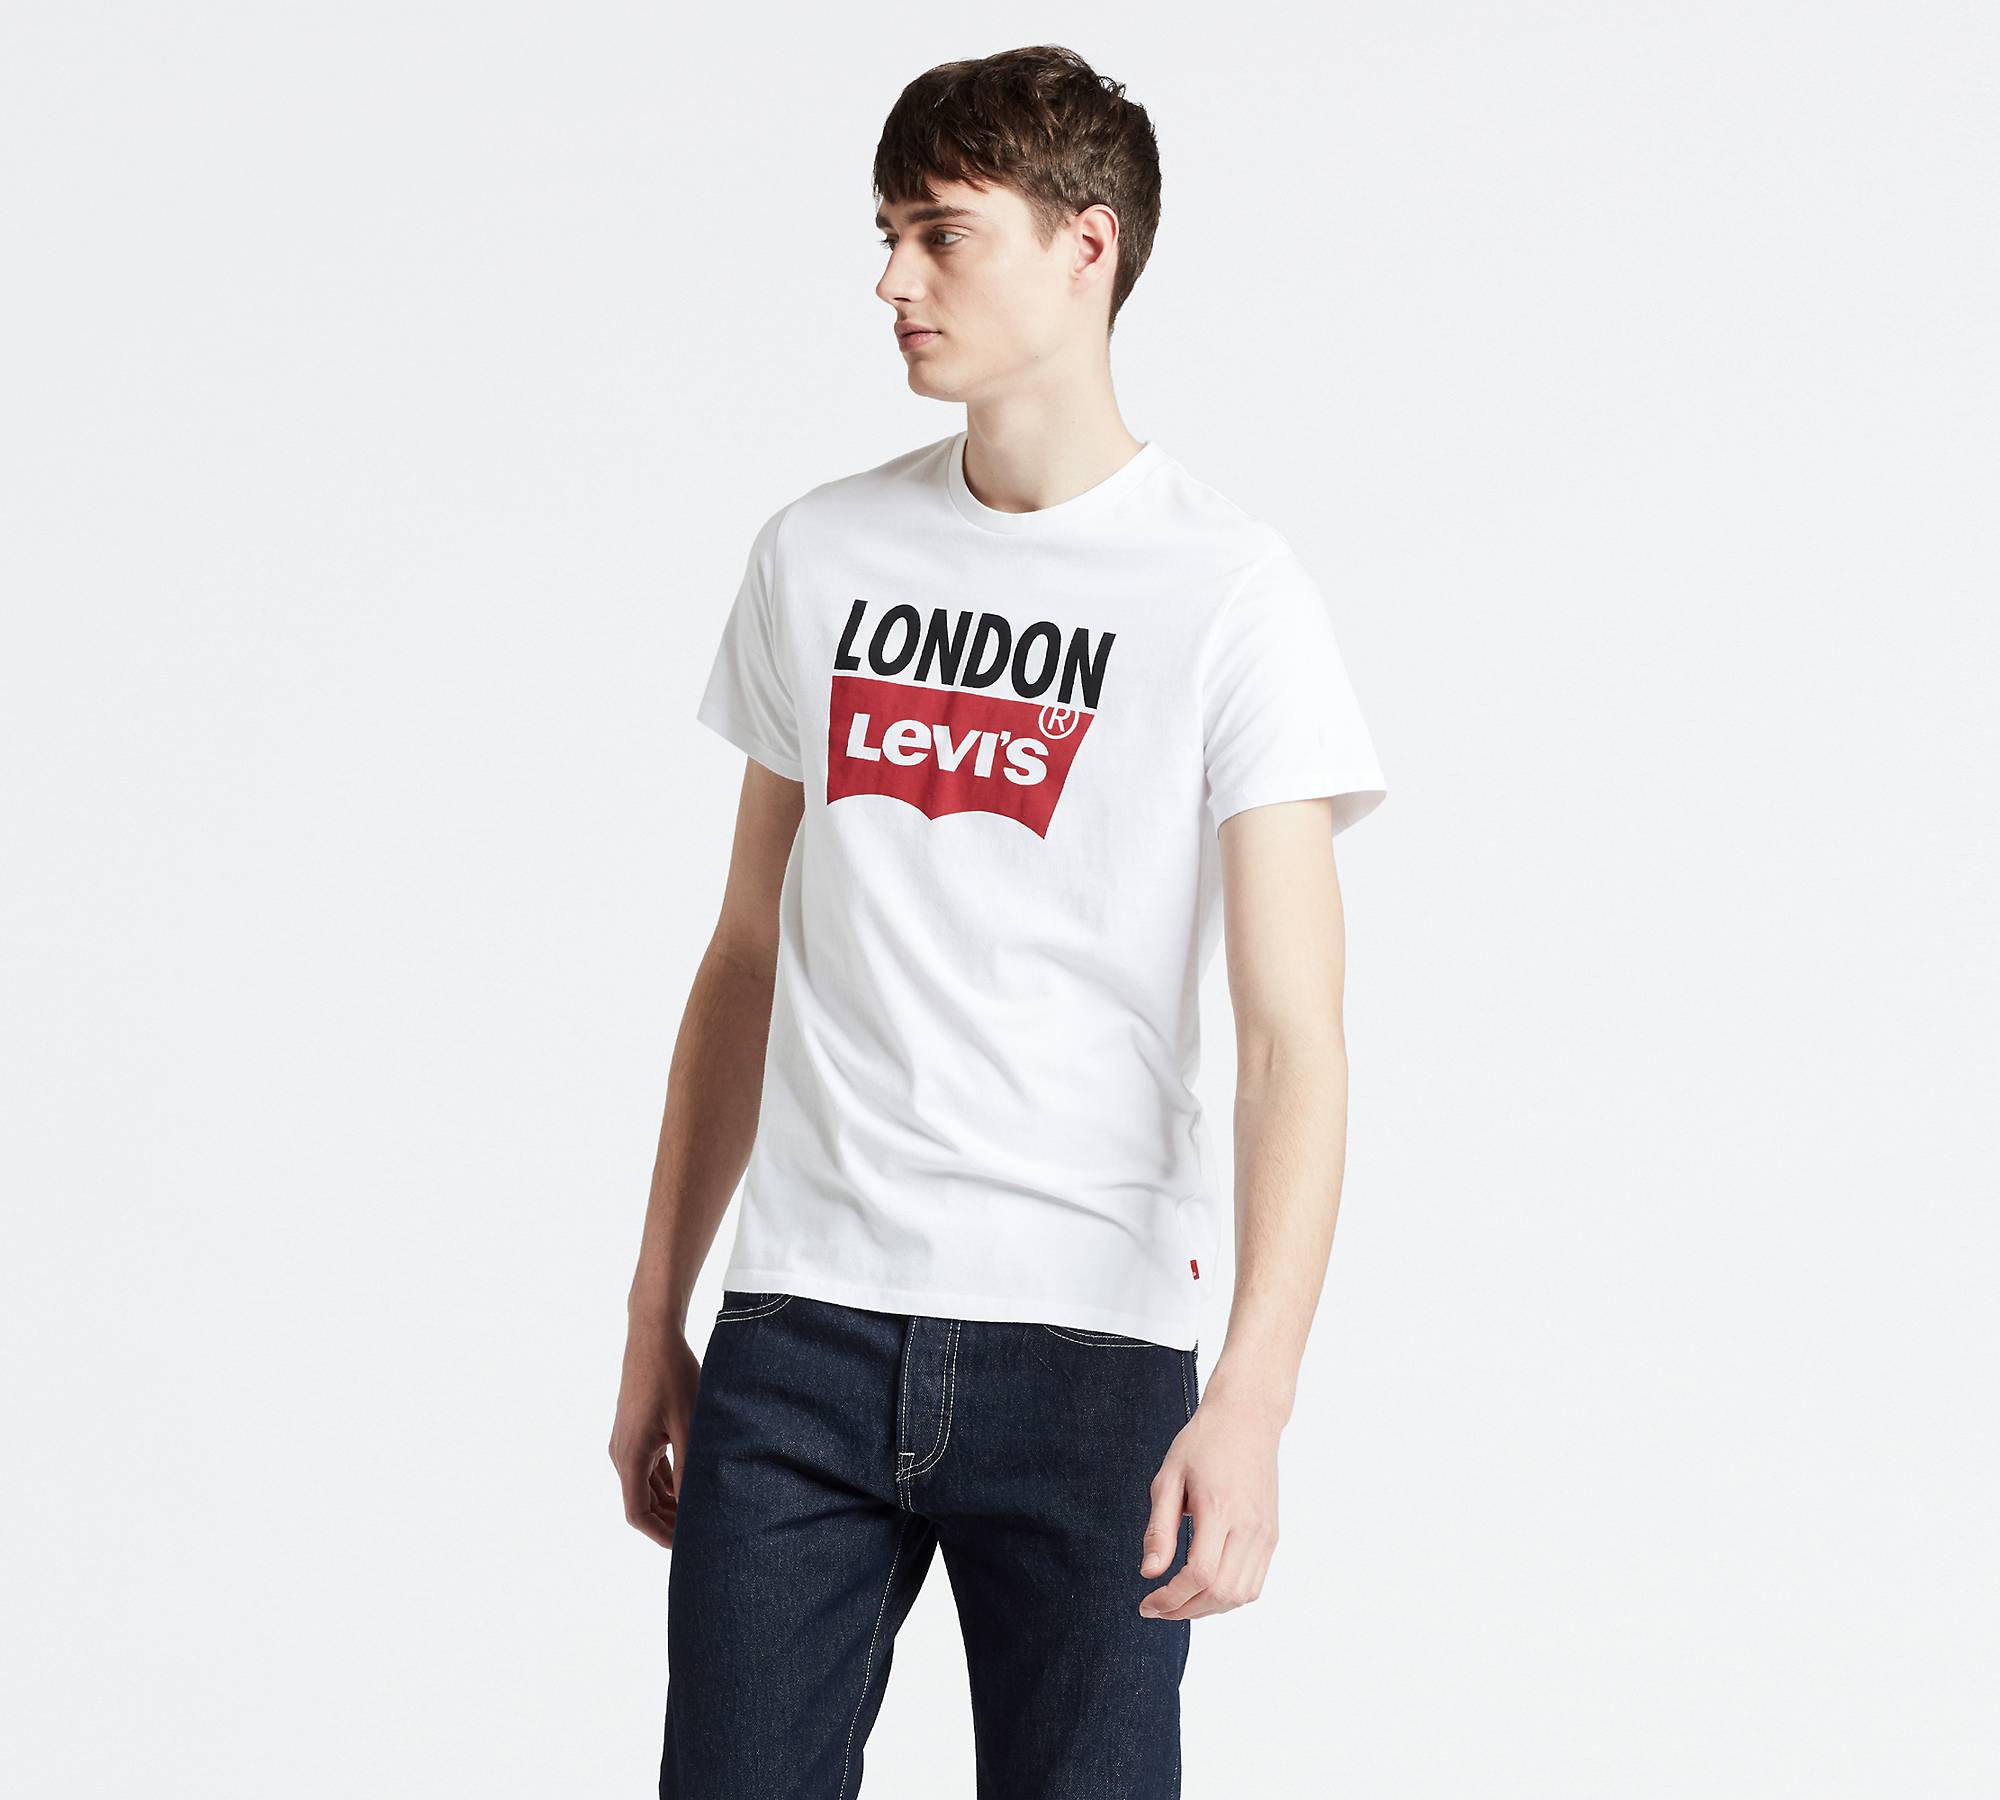 Destination T-shirt Londen 1